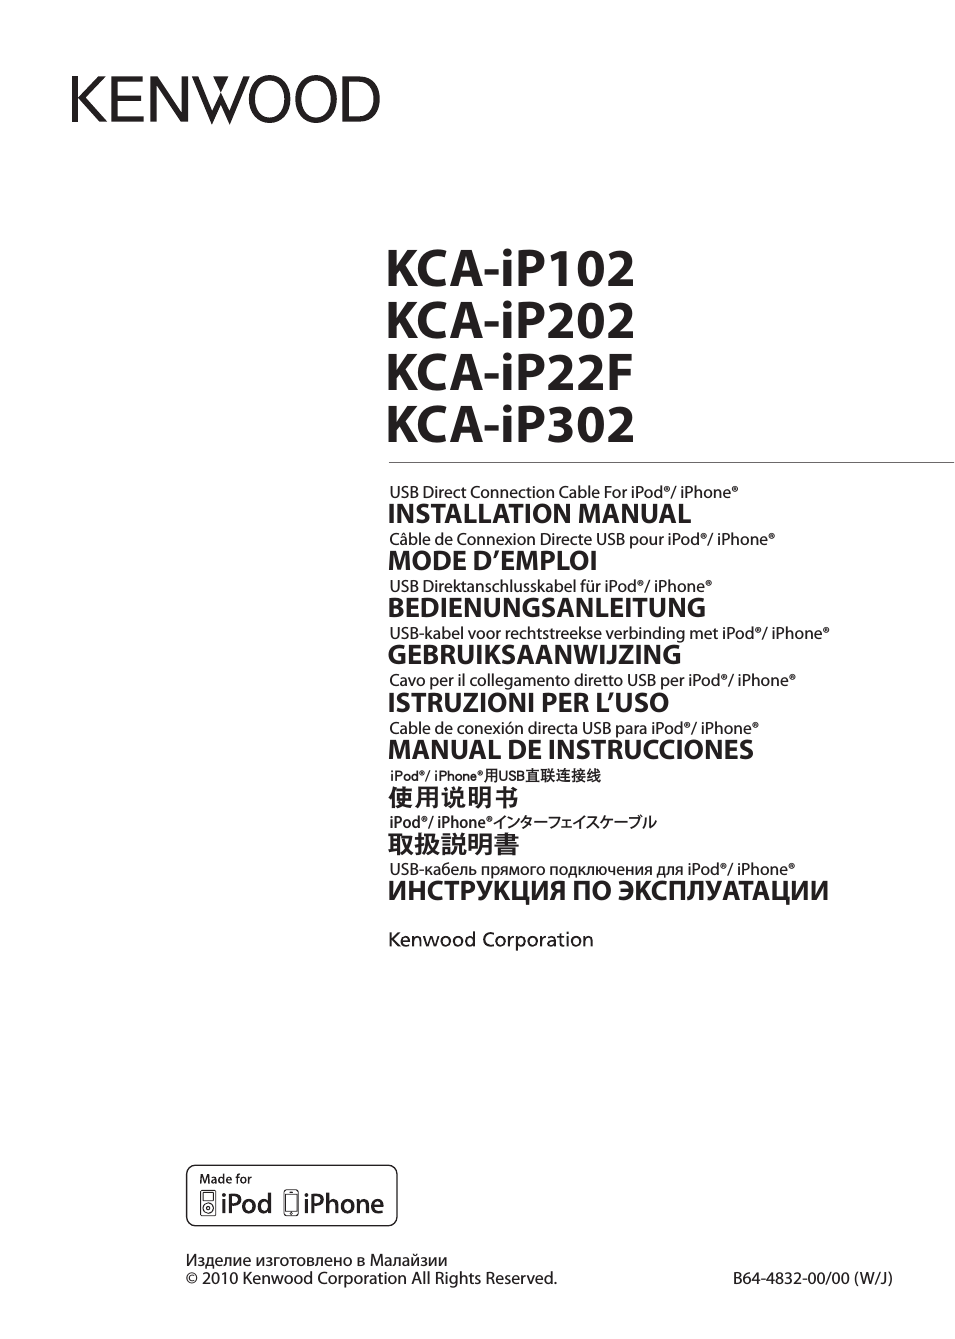 KCA-iP202